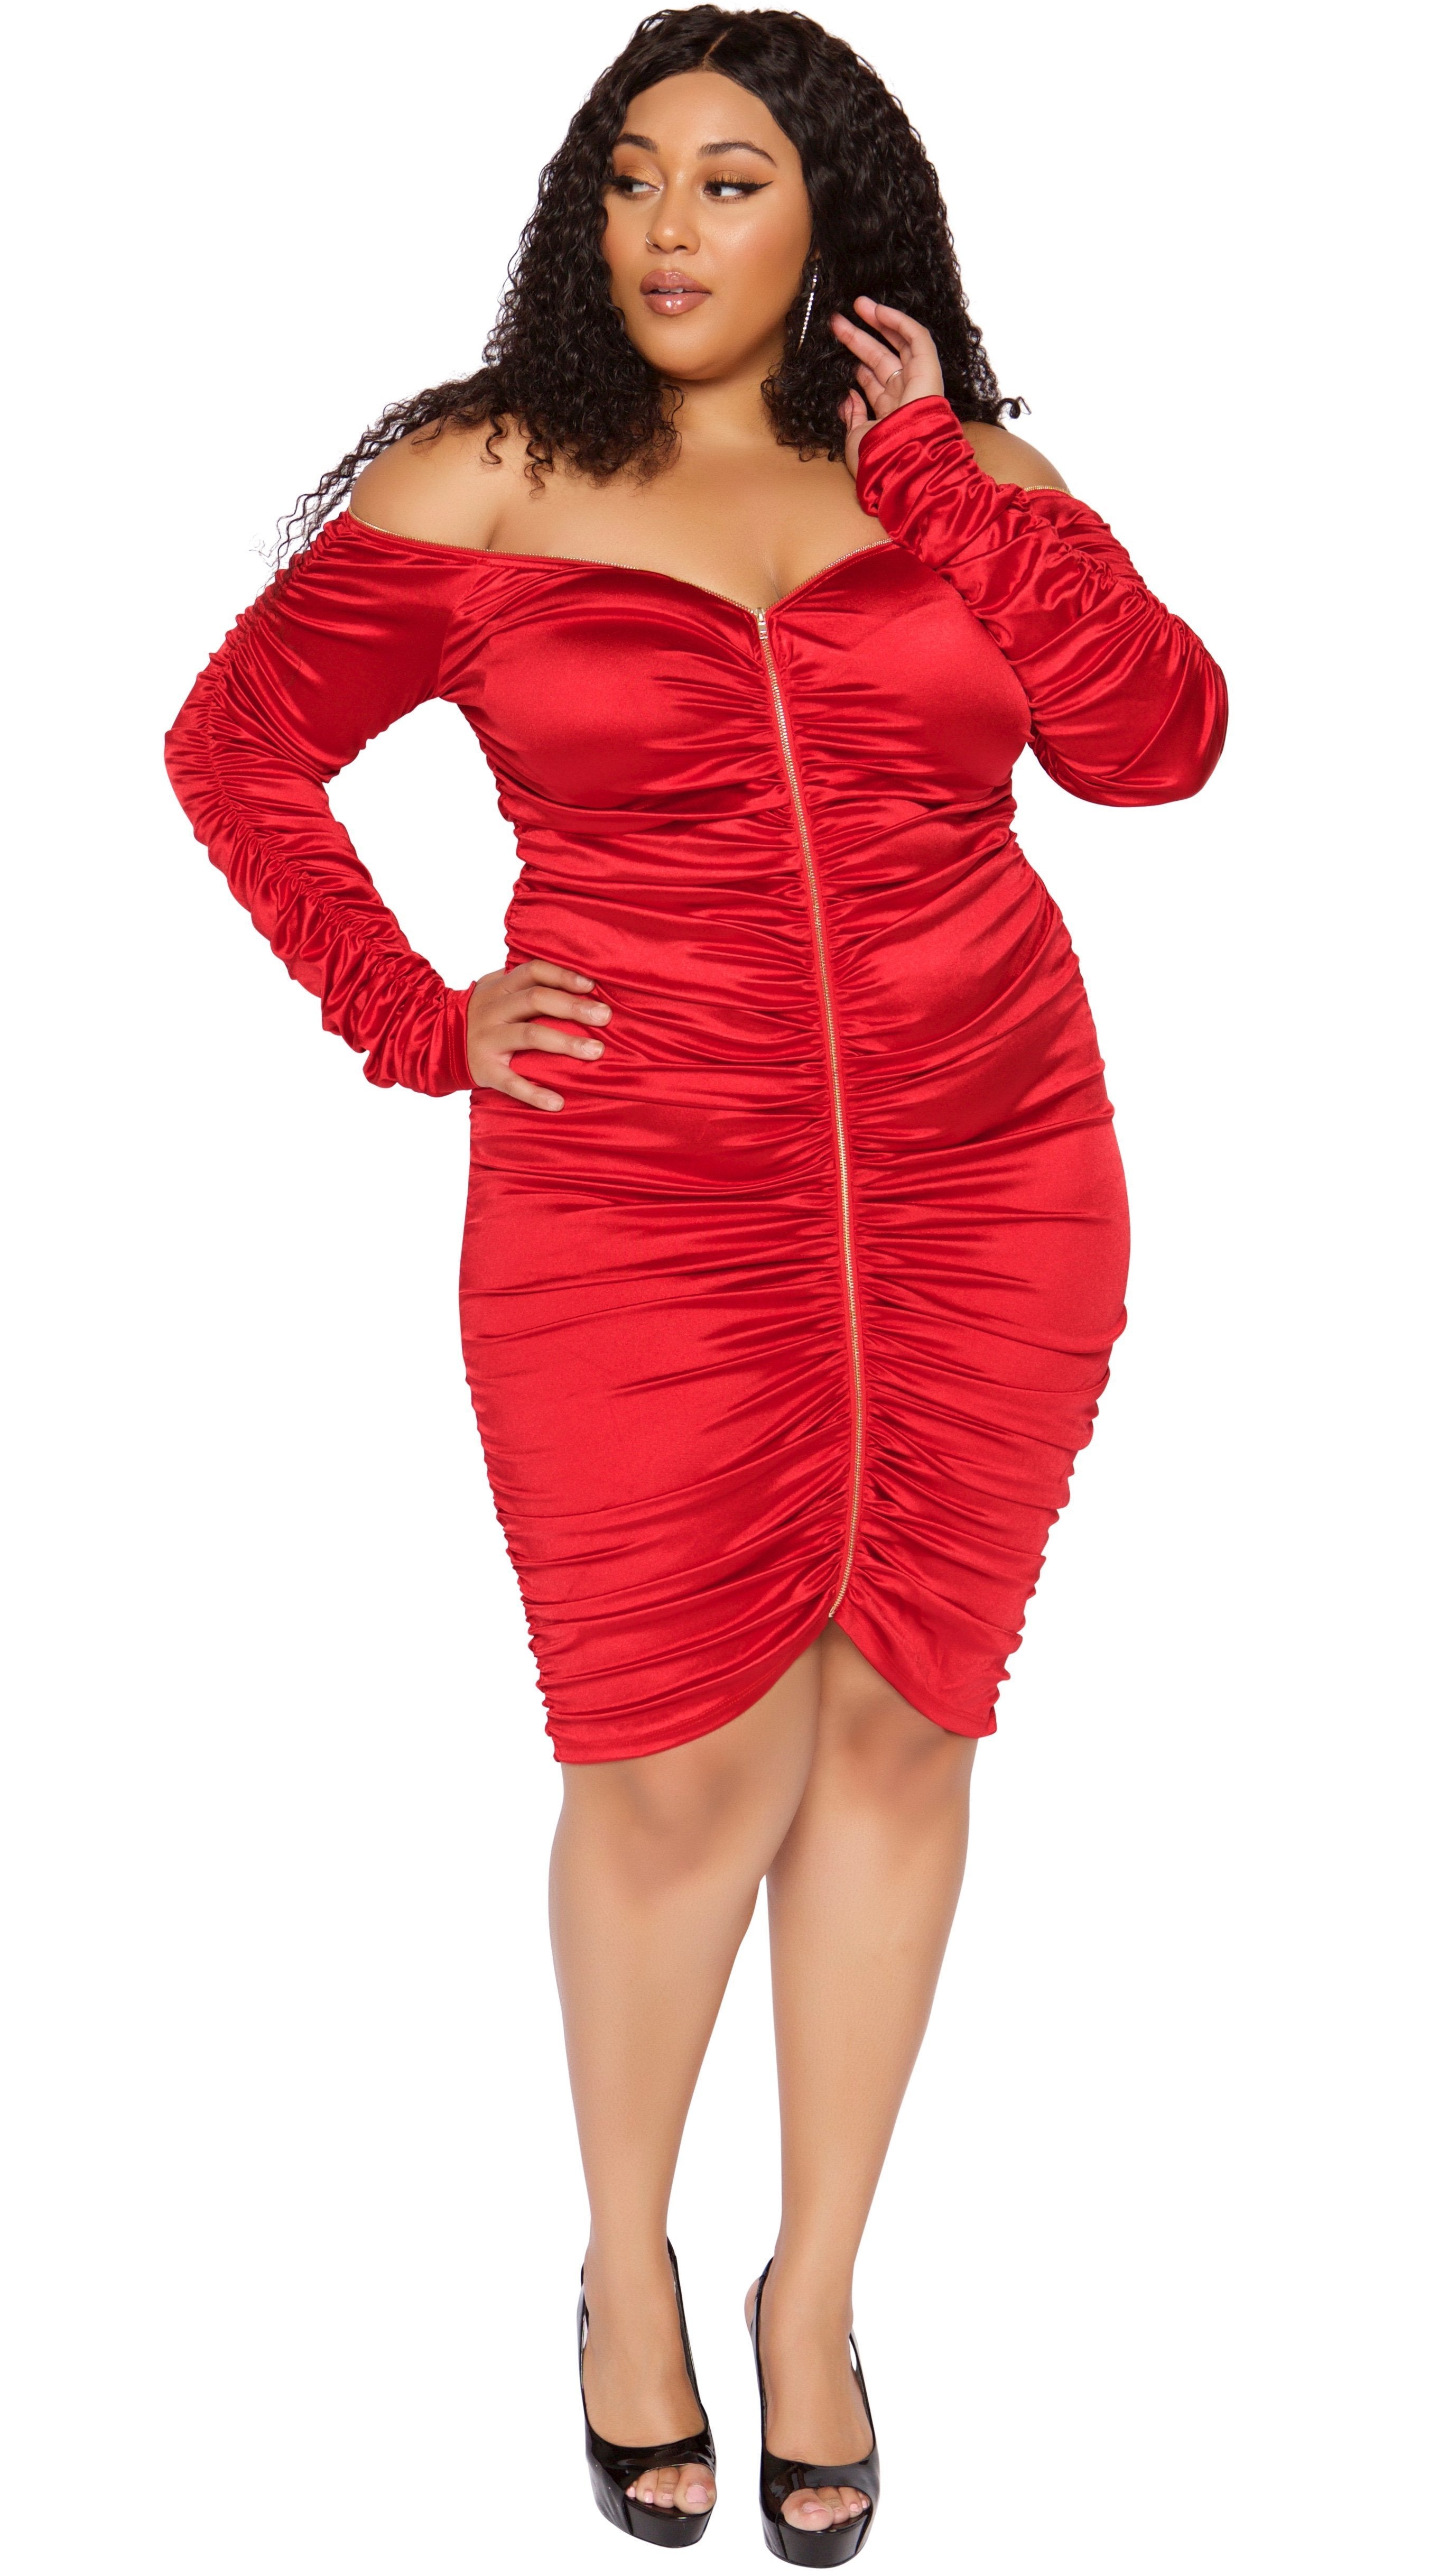 Plus Size Dress 1x 2x 3x – Boughie Curves